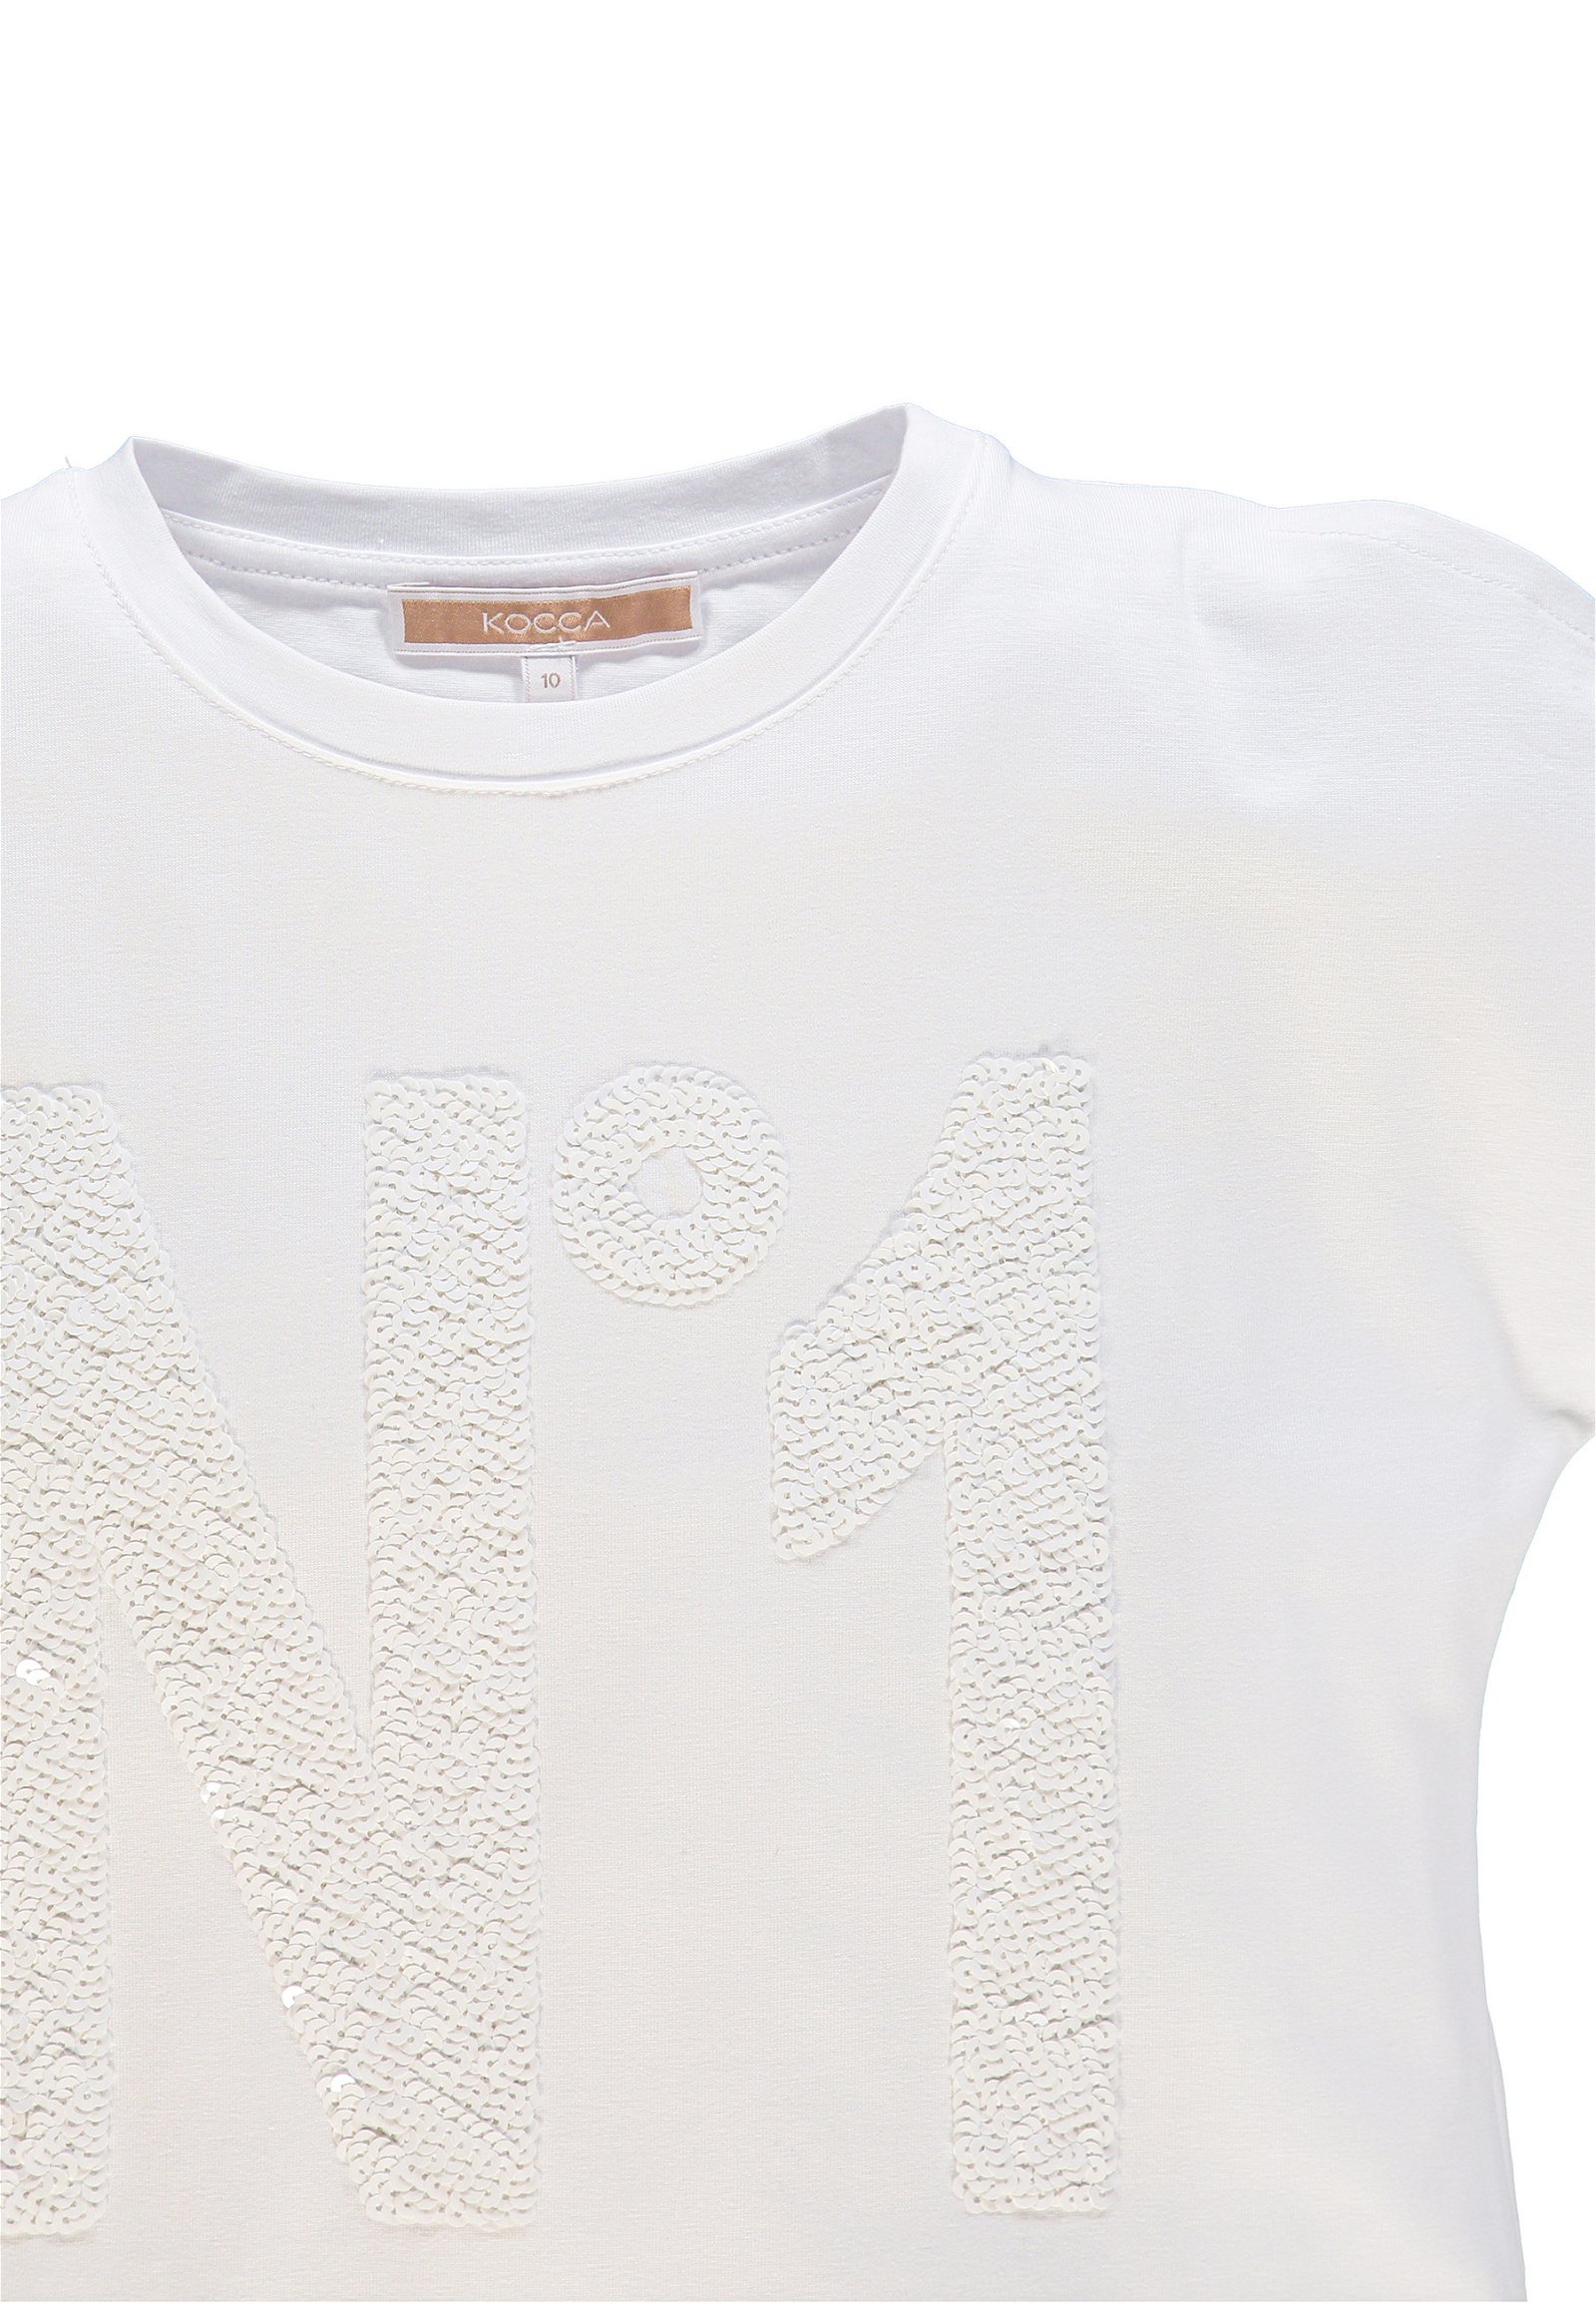 MODA BAMBINI Camicie & T-shirt Canneté Bianco 14A sconto 73% Zara T-shirt 